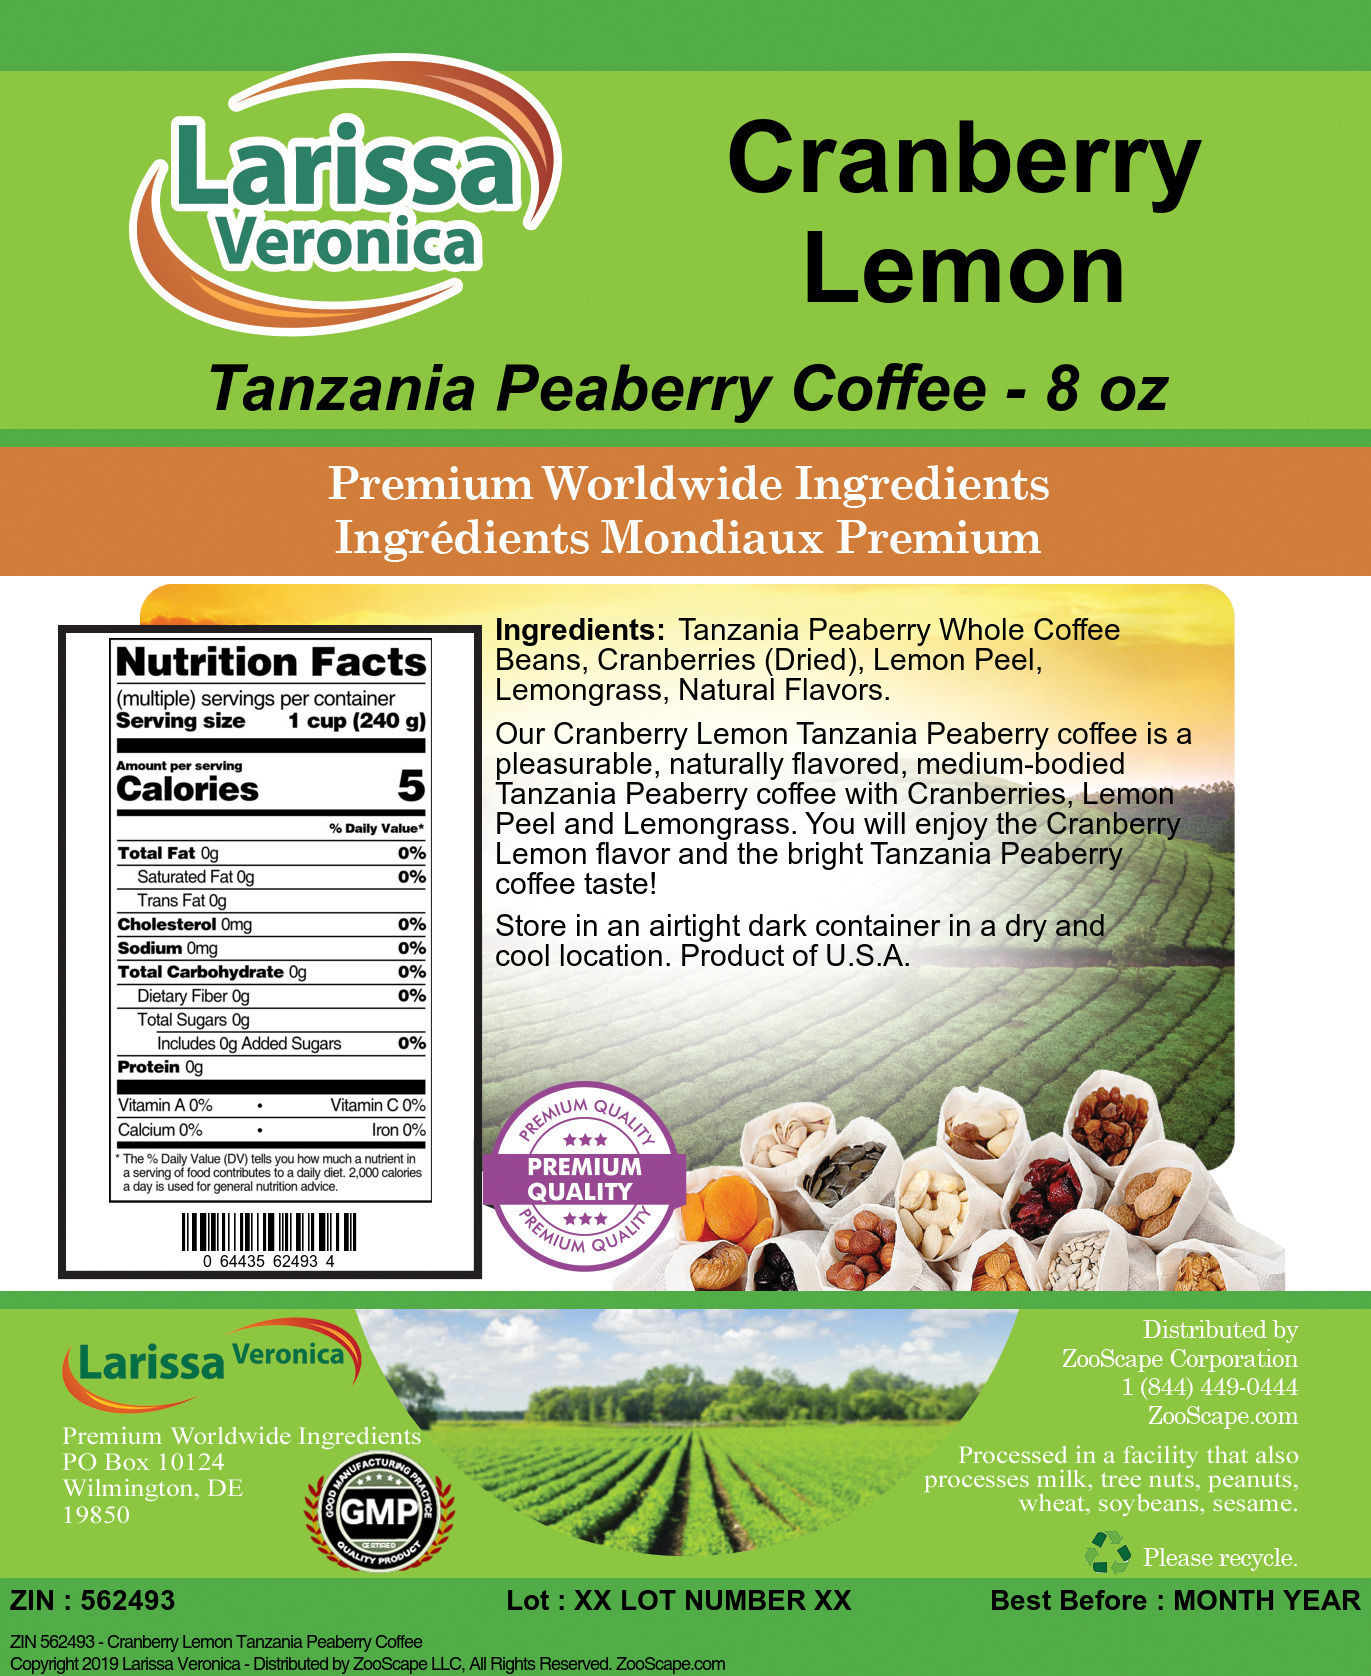 Cranberry Lemon Tanzania Peaberry Coffee - Label